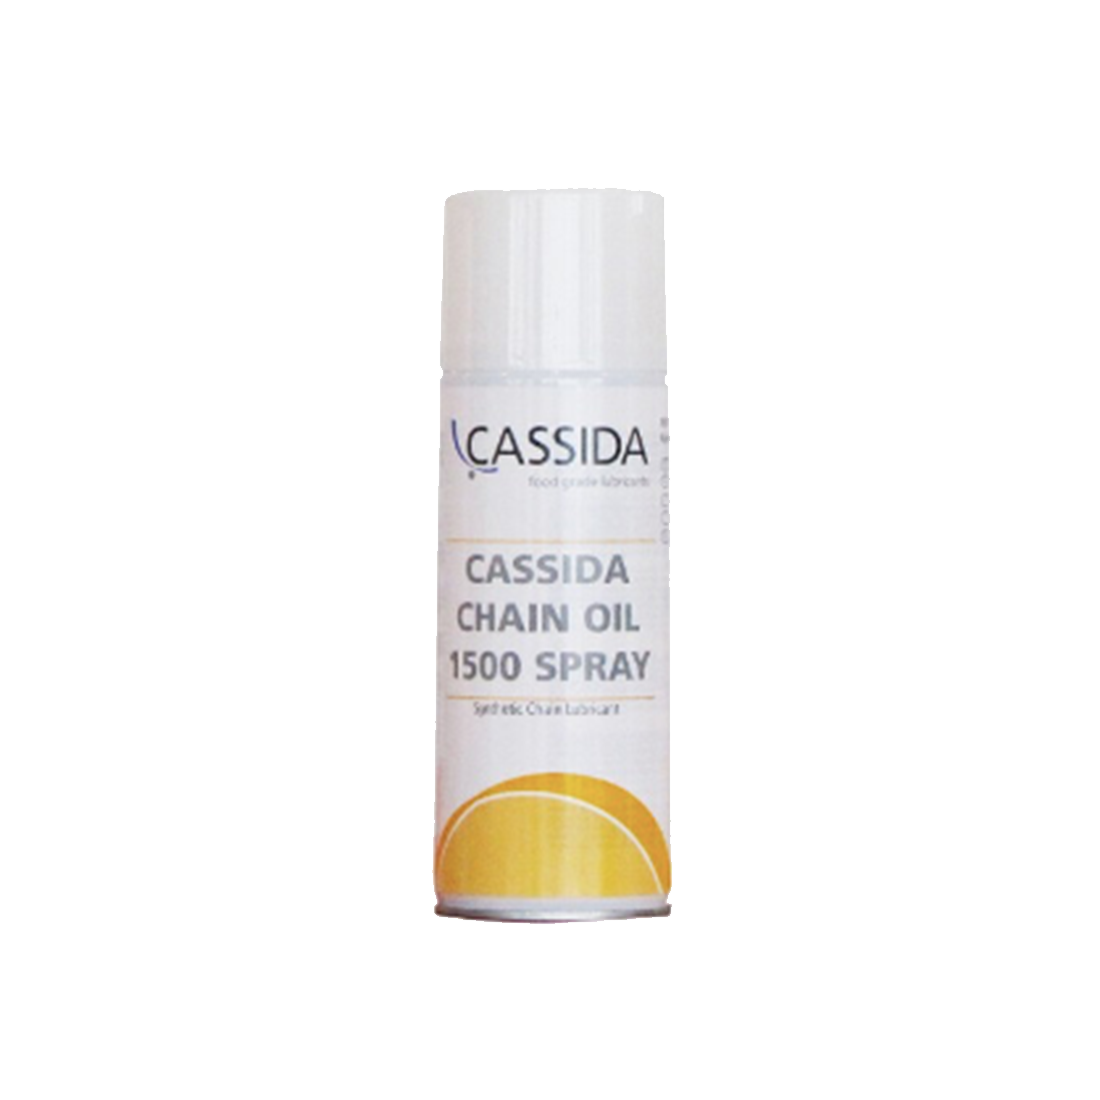 Syntetiskkedjeolja Shell Cassida Chain Oil 1500 Spray, 400ml